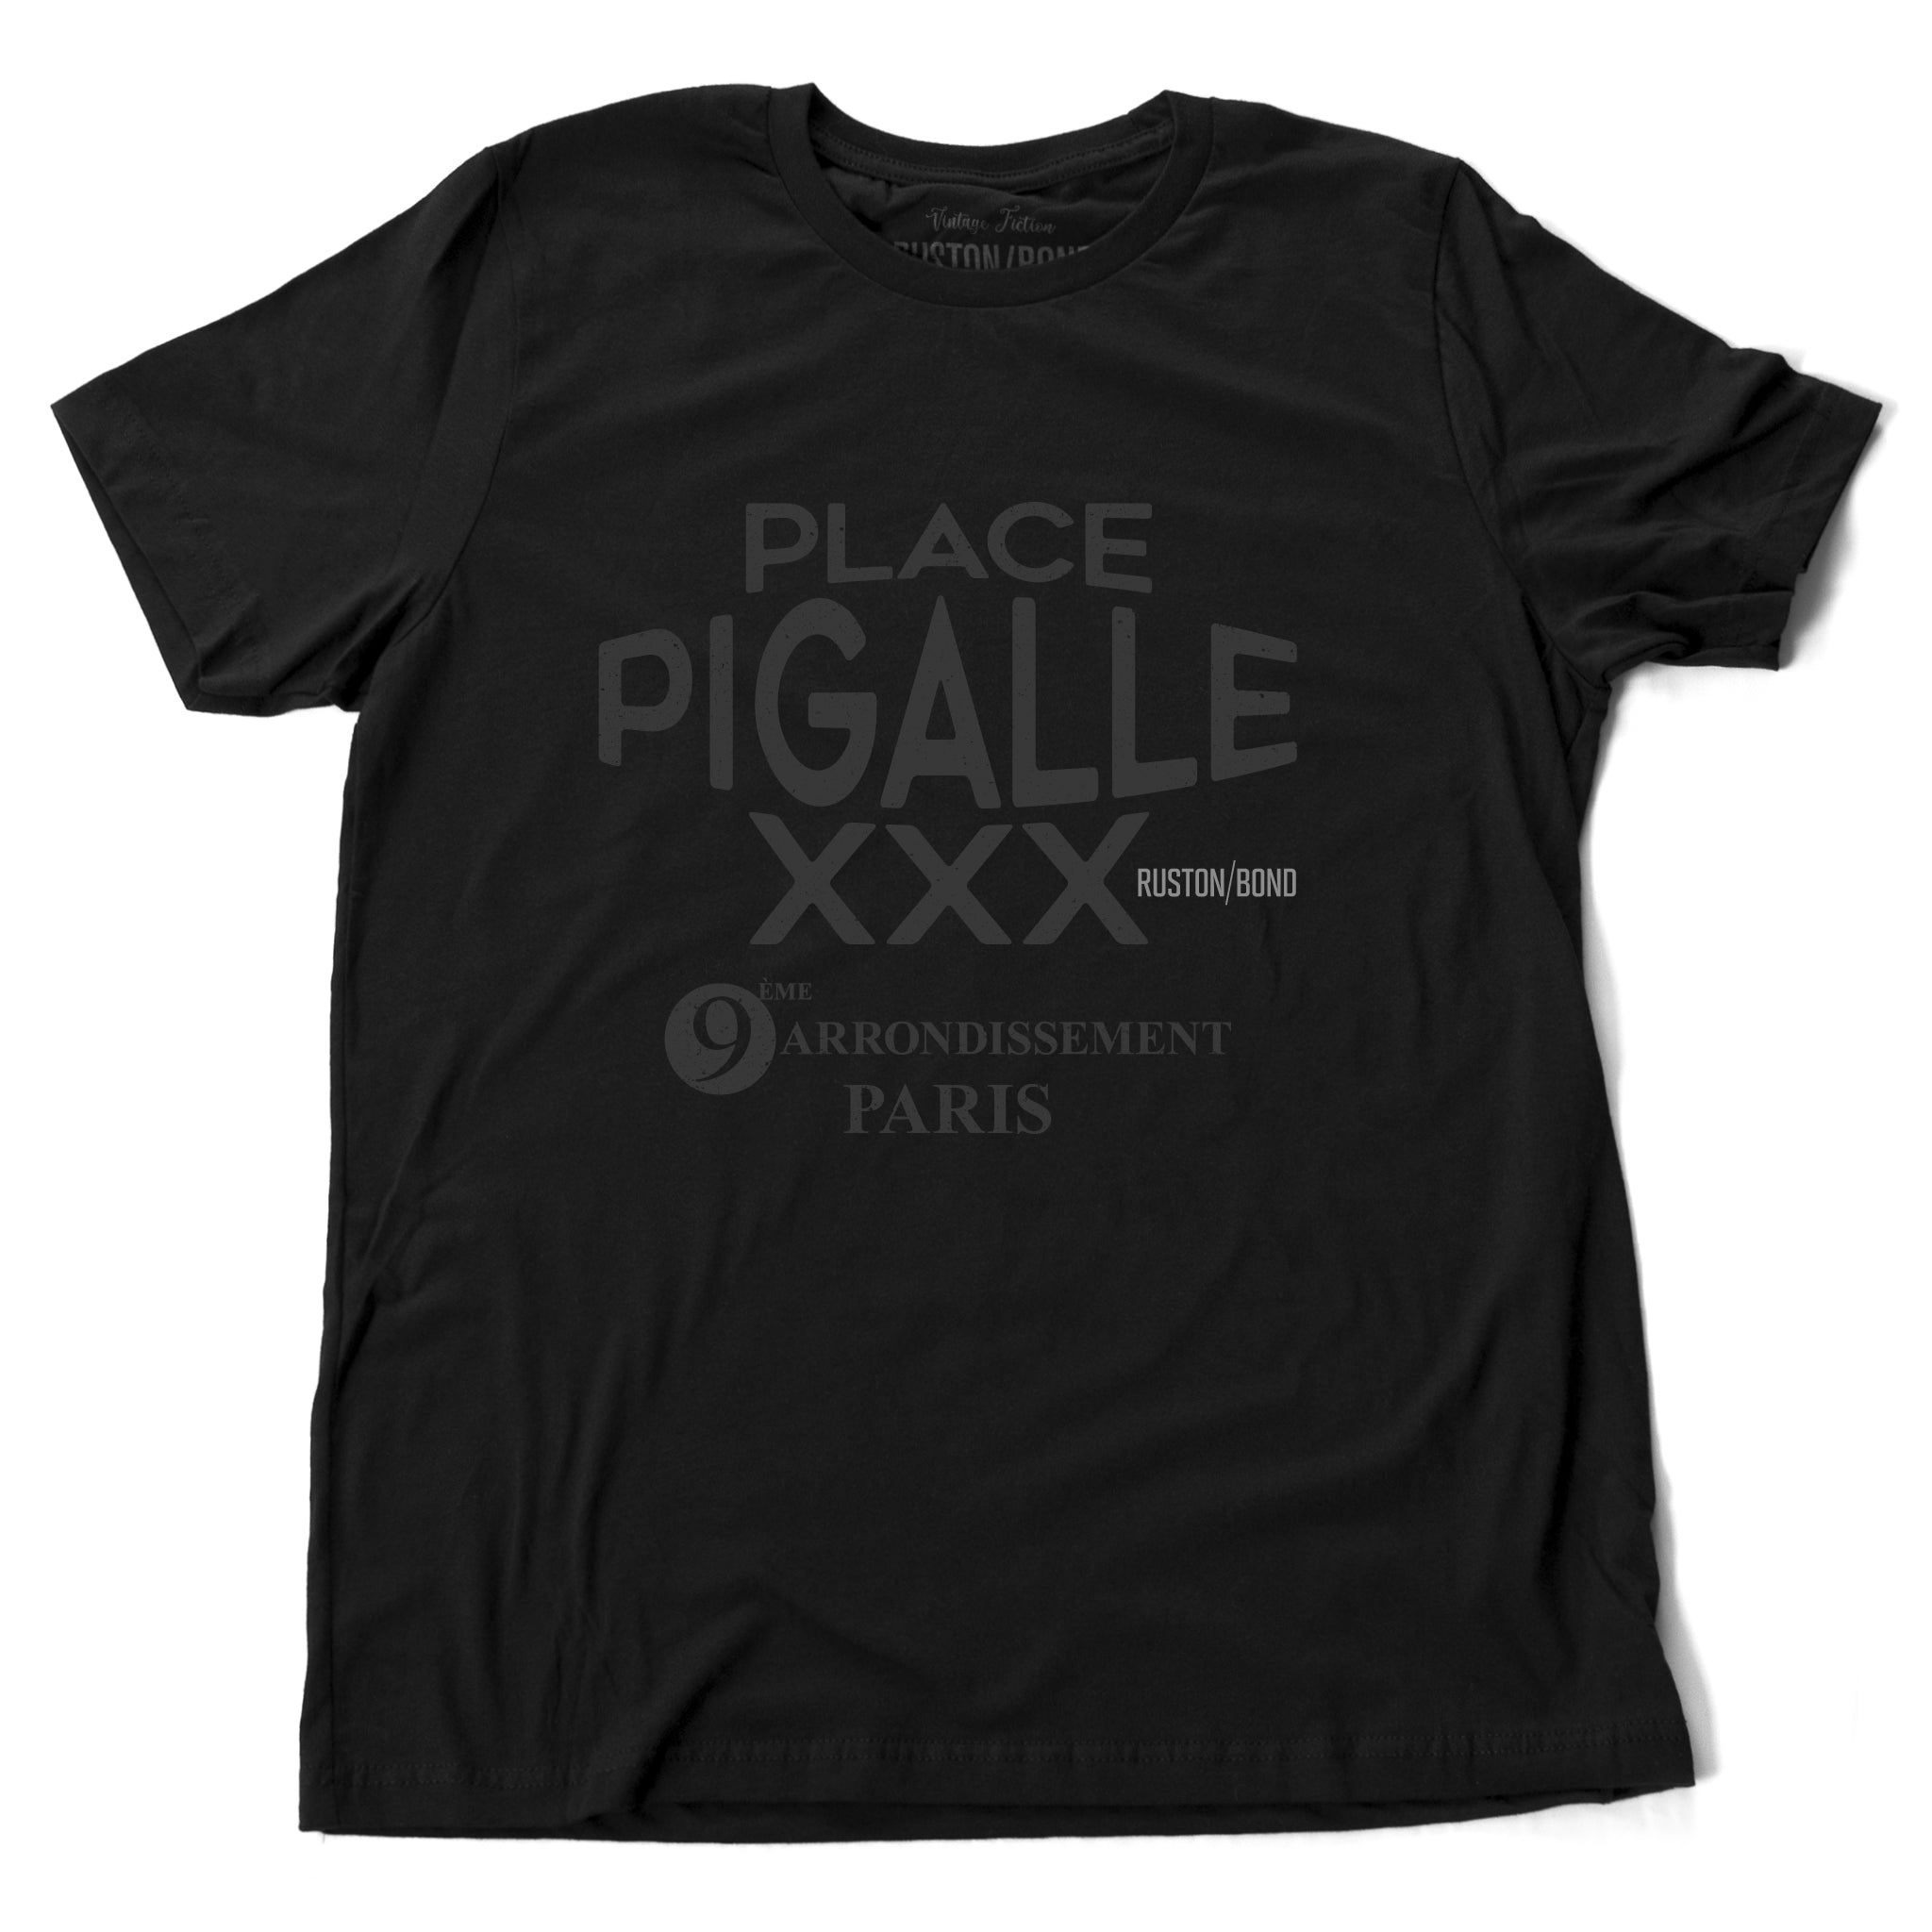 A fashionable graphic t-shirt in Classic Black, promoting a fictional adult entertainment establishment in Paris: “Place Pigalle XXX, 9th Arrondisement” By Ruston/Bond, from Wolfsaint.net